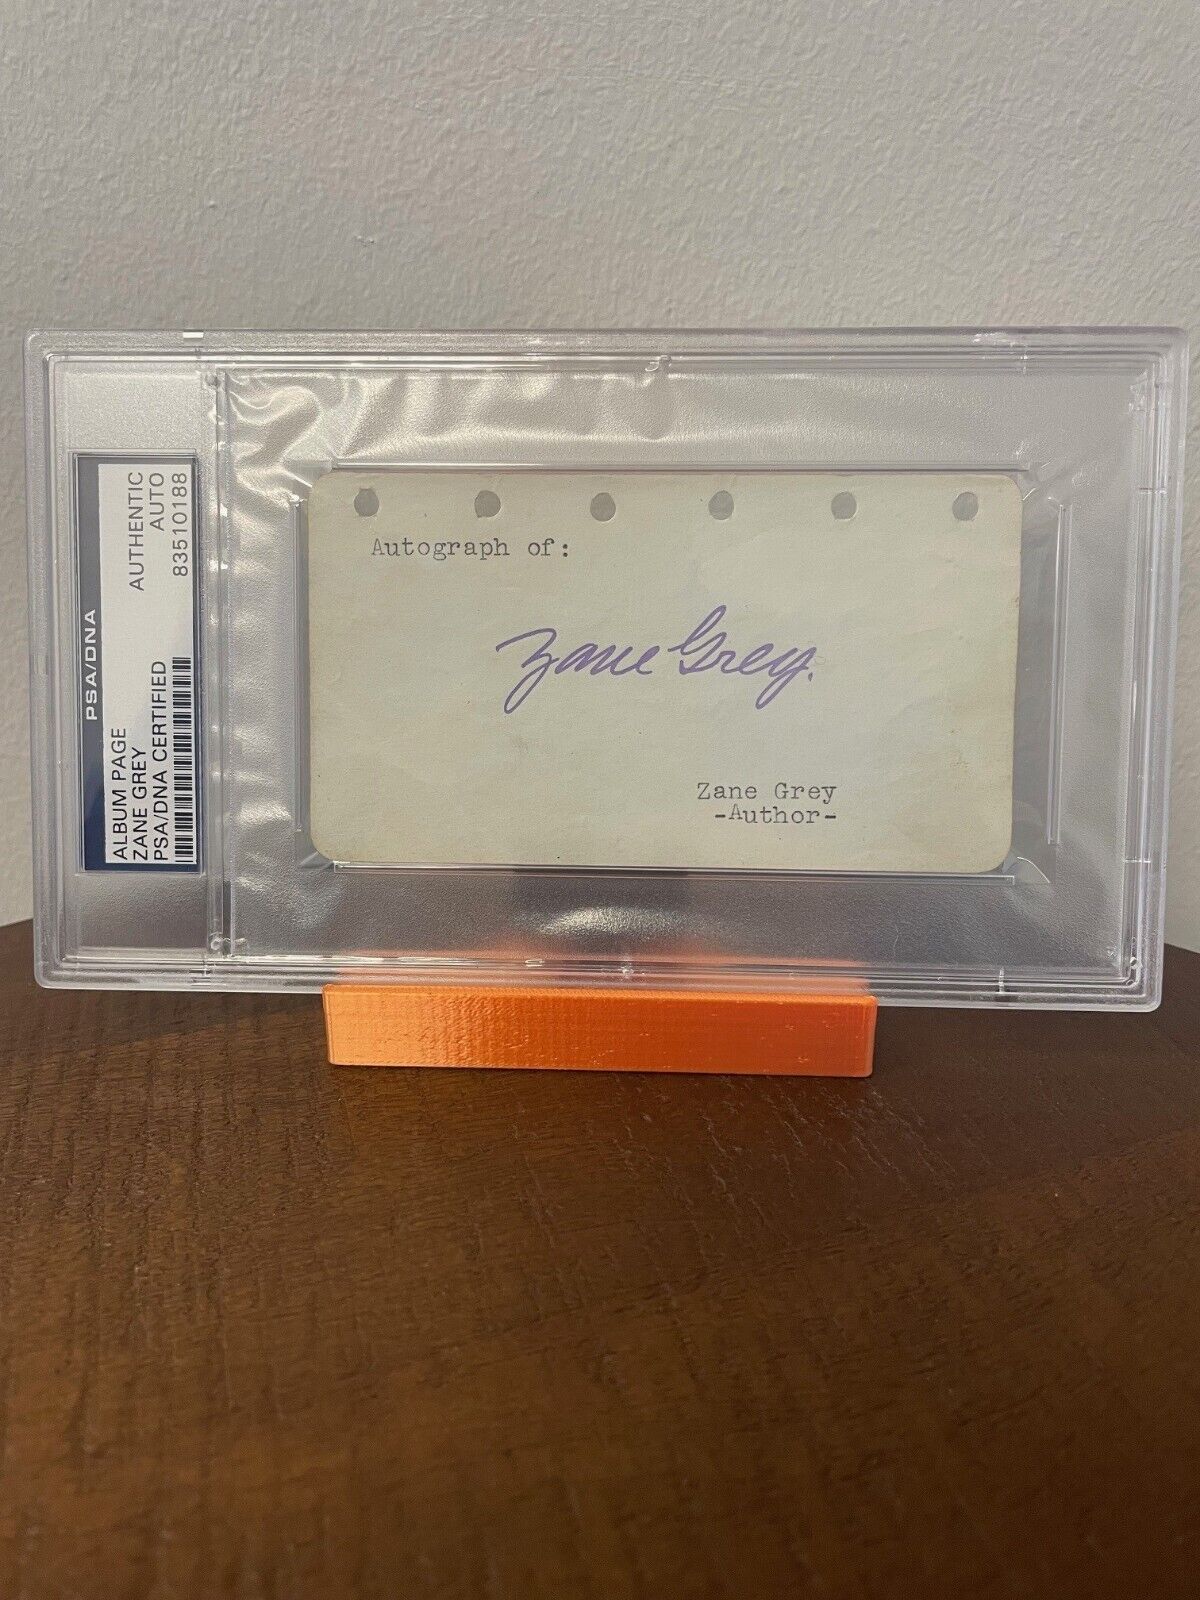 ZANE GREY - SIGNED AUTOGRAPHED ALBUM PAGE - PSA/DNA SLABBED & CERTIFIED